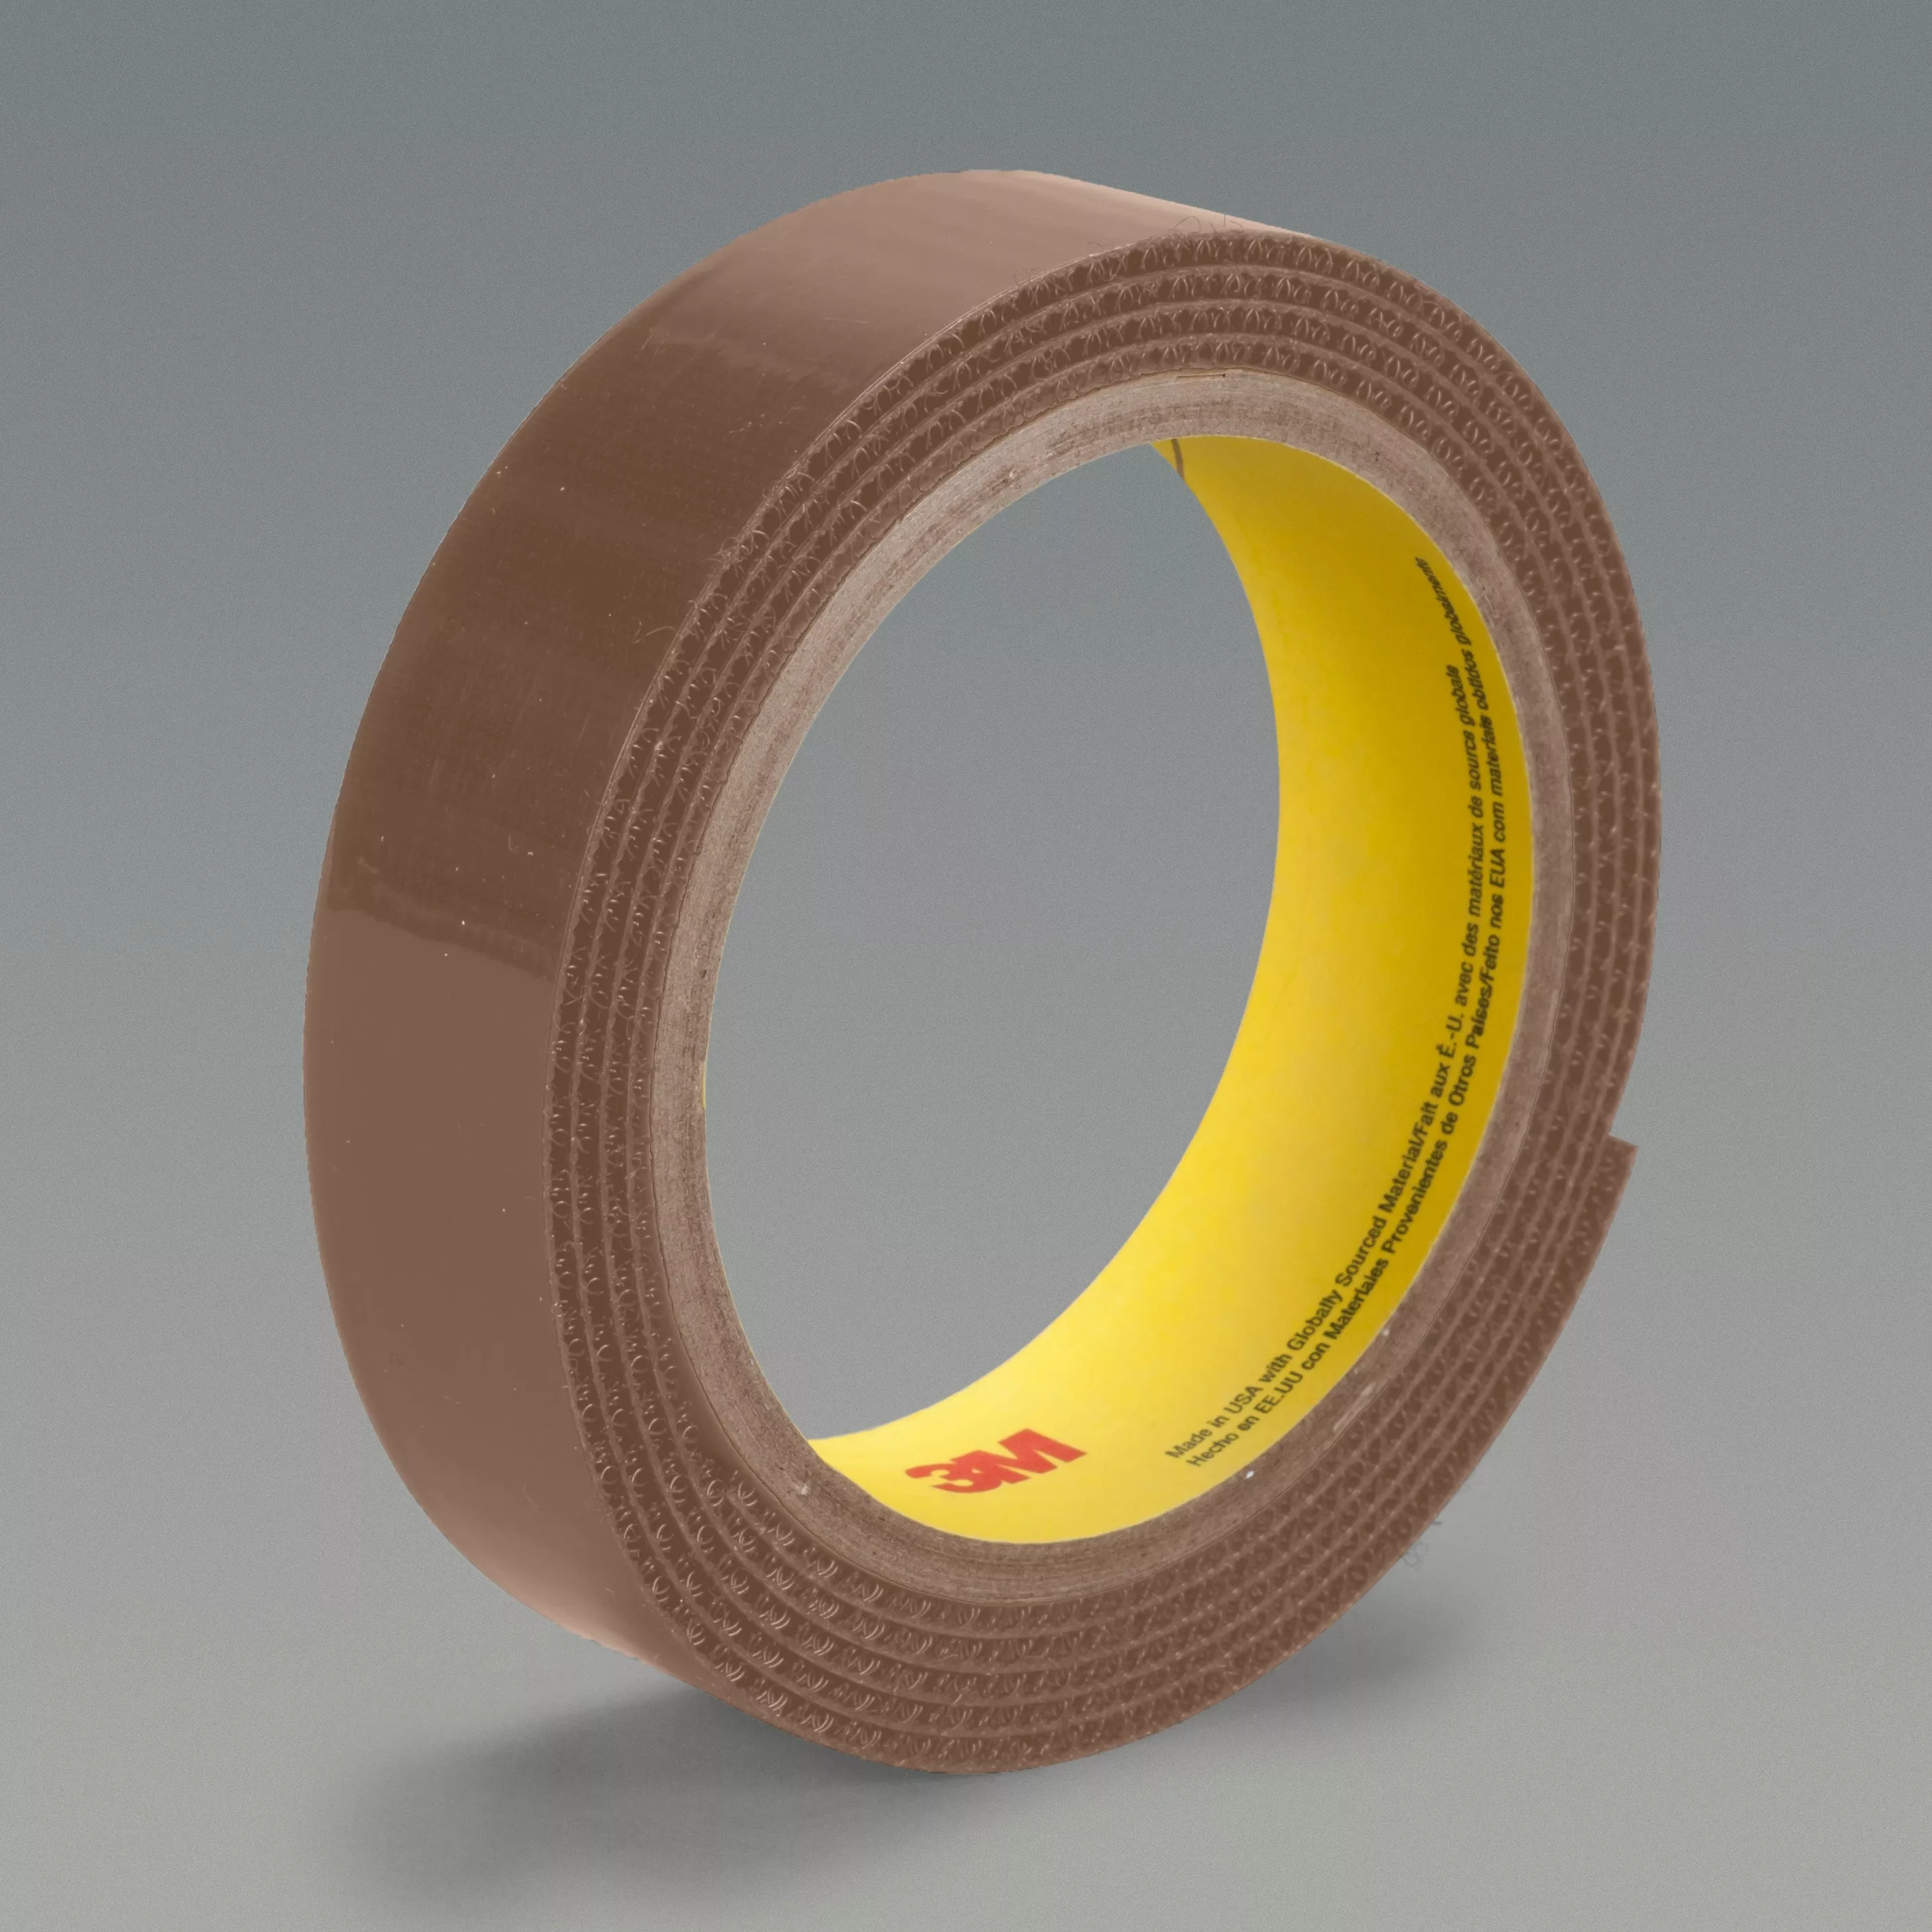 3M™ Loop Fastener SJ3401, Cocoa Brown, 1 in x 50 yd, 12 rolls per case